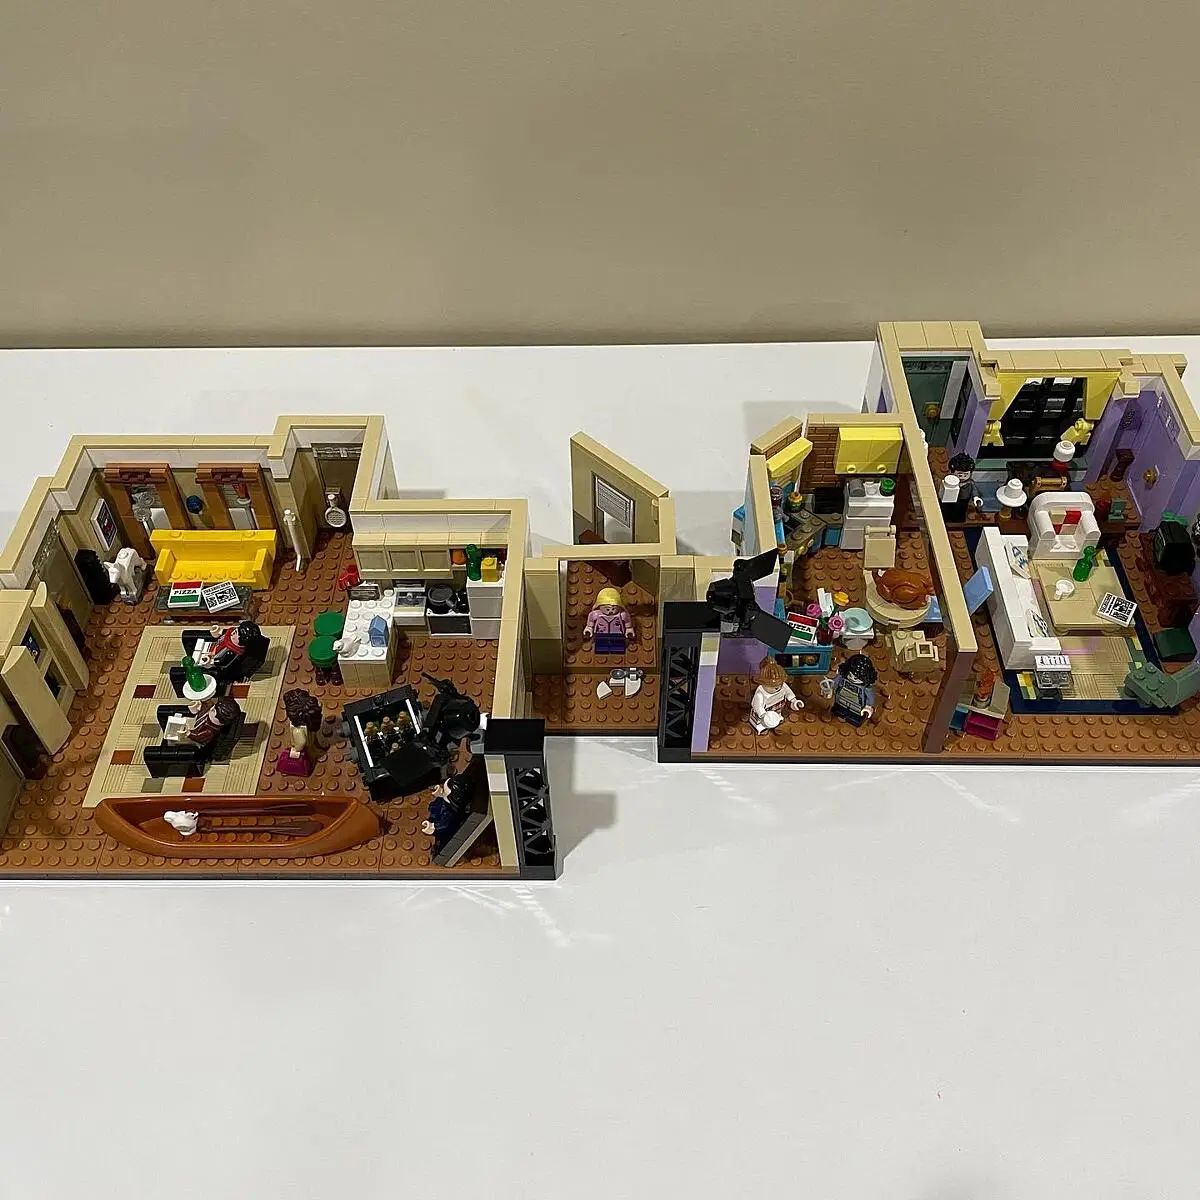 Lego - LEGO Ideas Friends Apartments - Briques Lego - Rue du Commerce